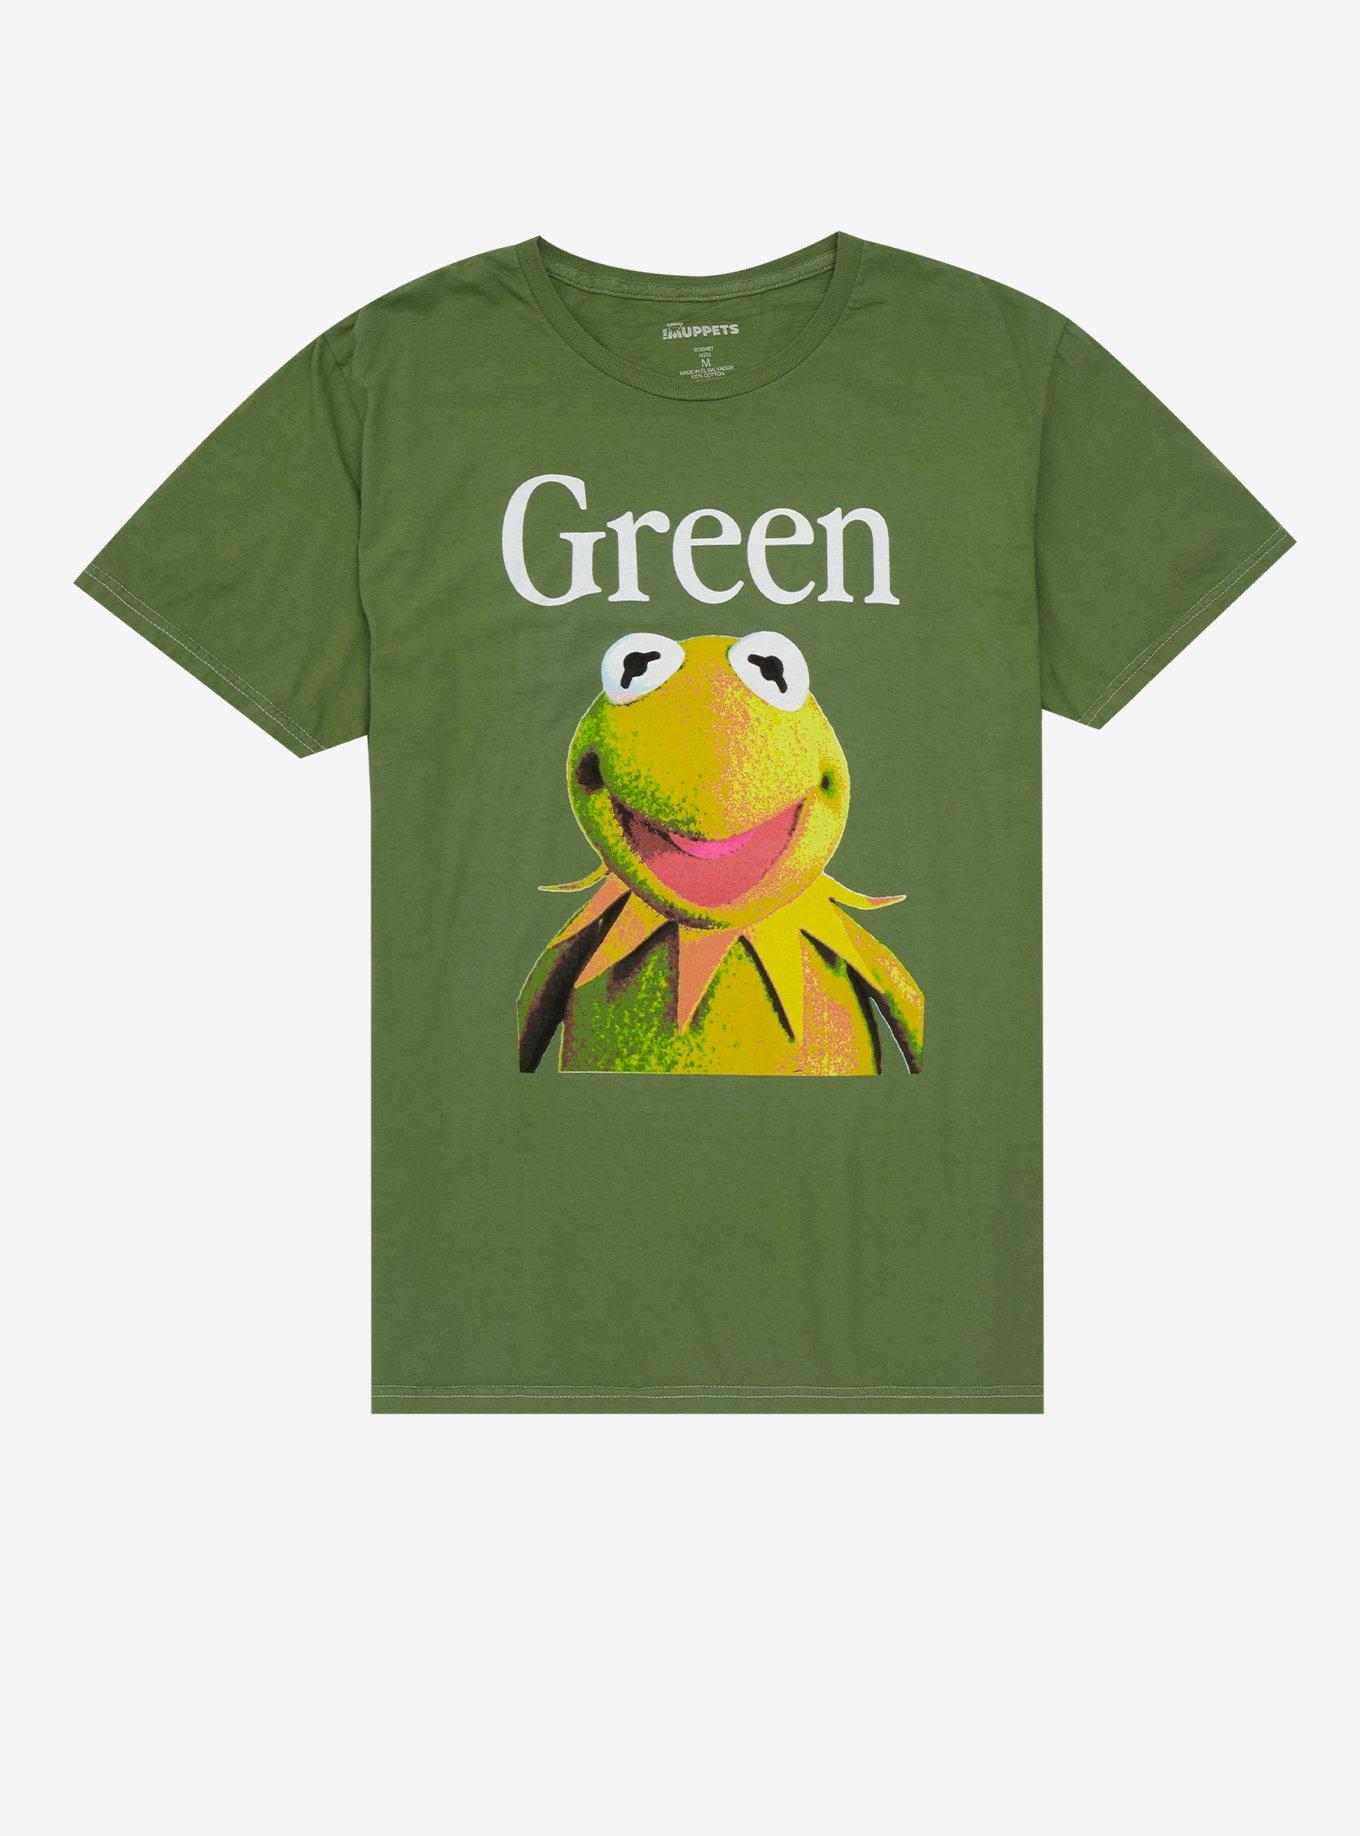 | Hot Disney Topic The T-Shirt Kermit Green Muppets